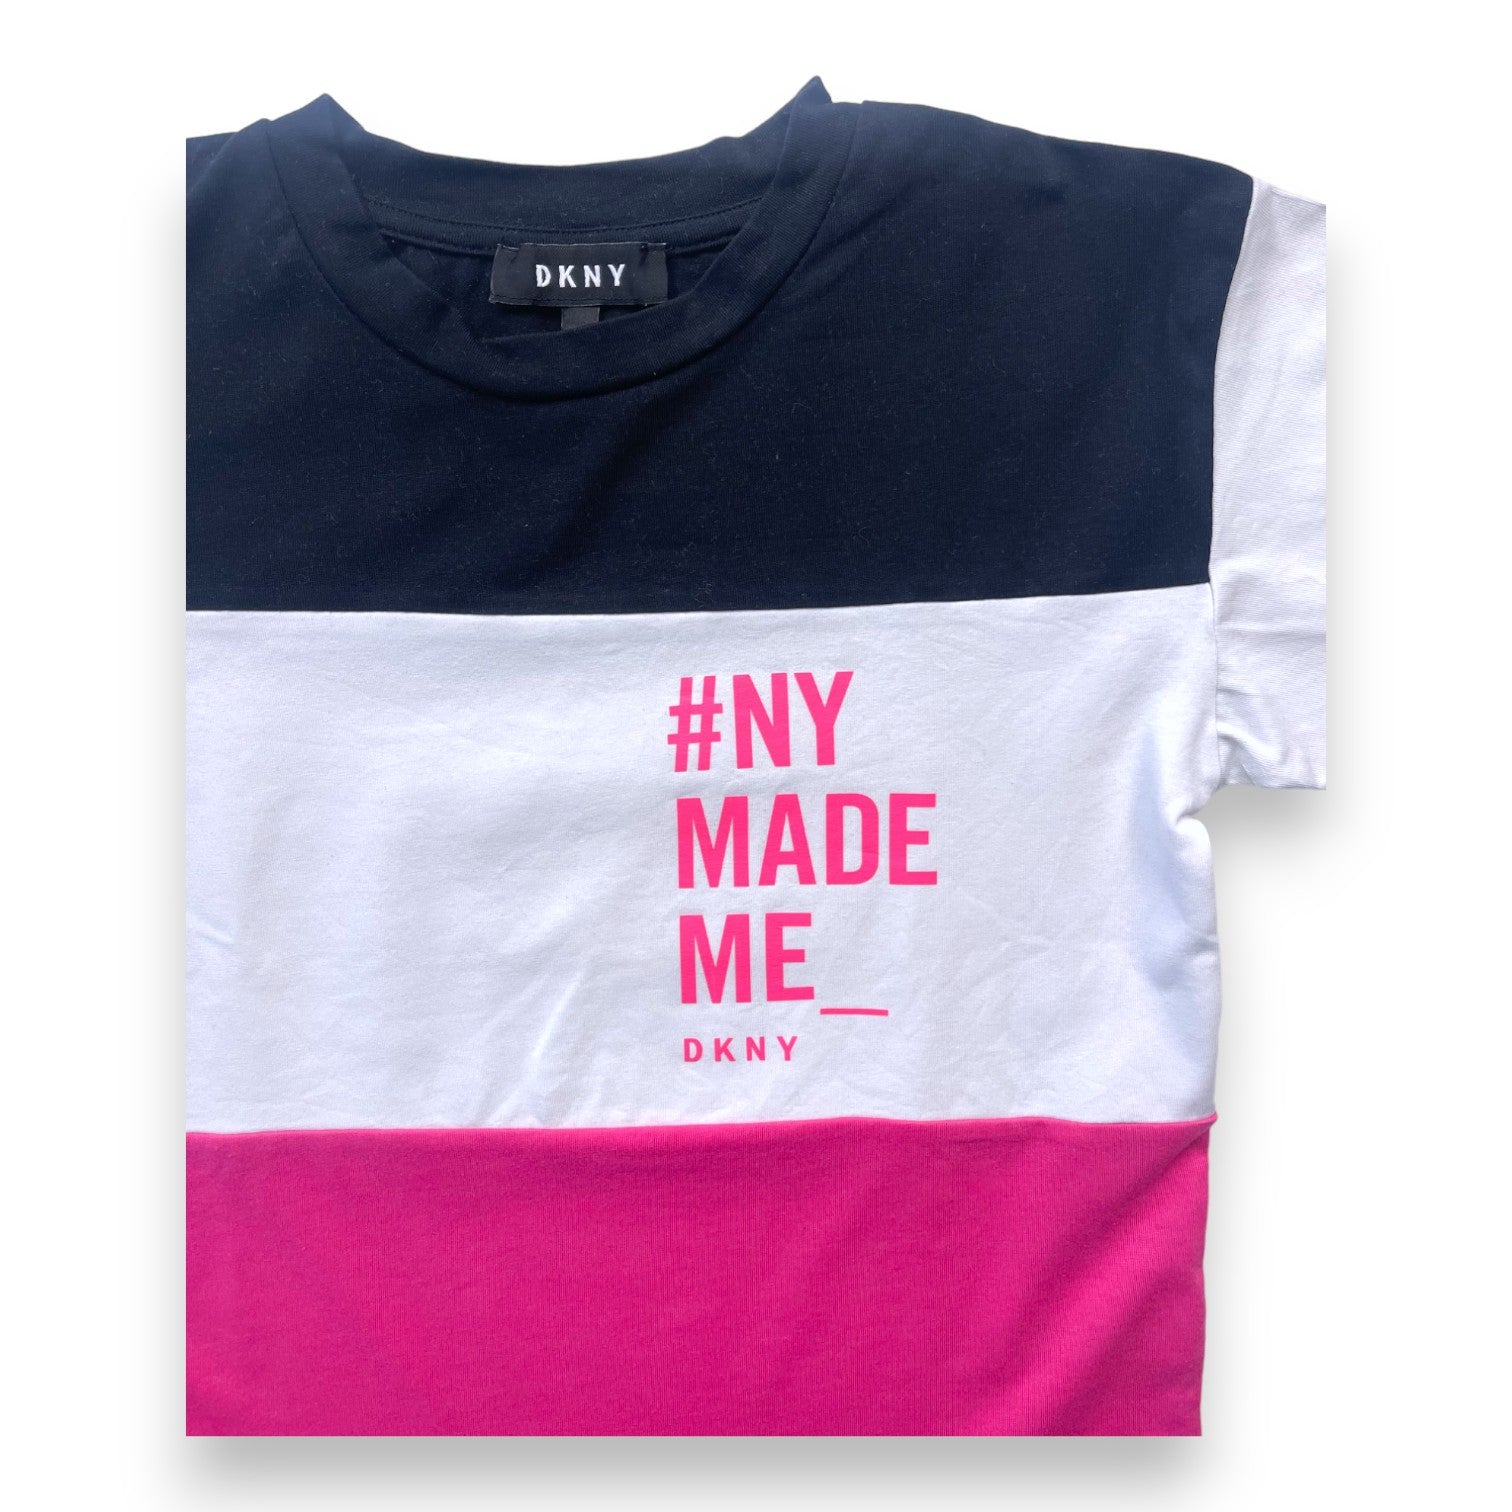 DKNY - T shirt noir blanc et rose "#NY made me" - 6 ans